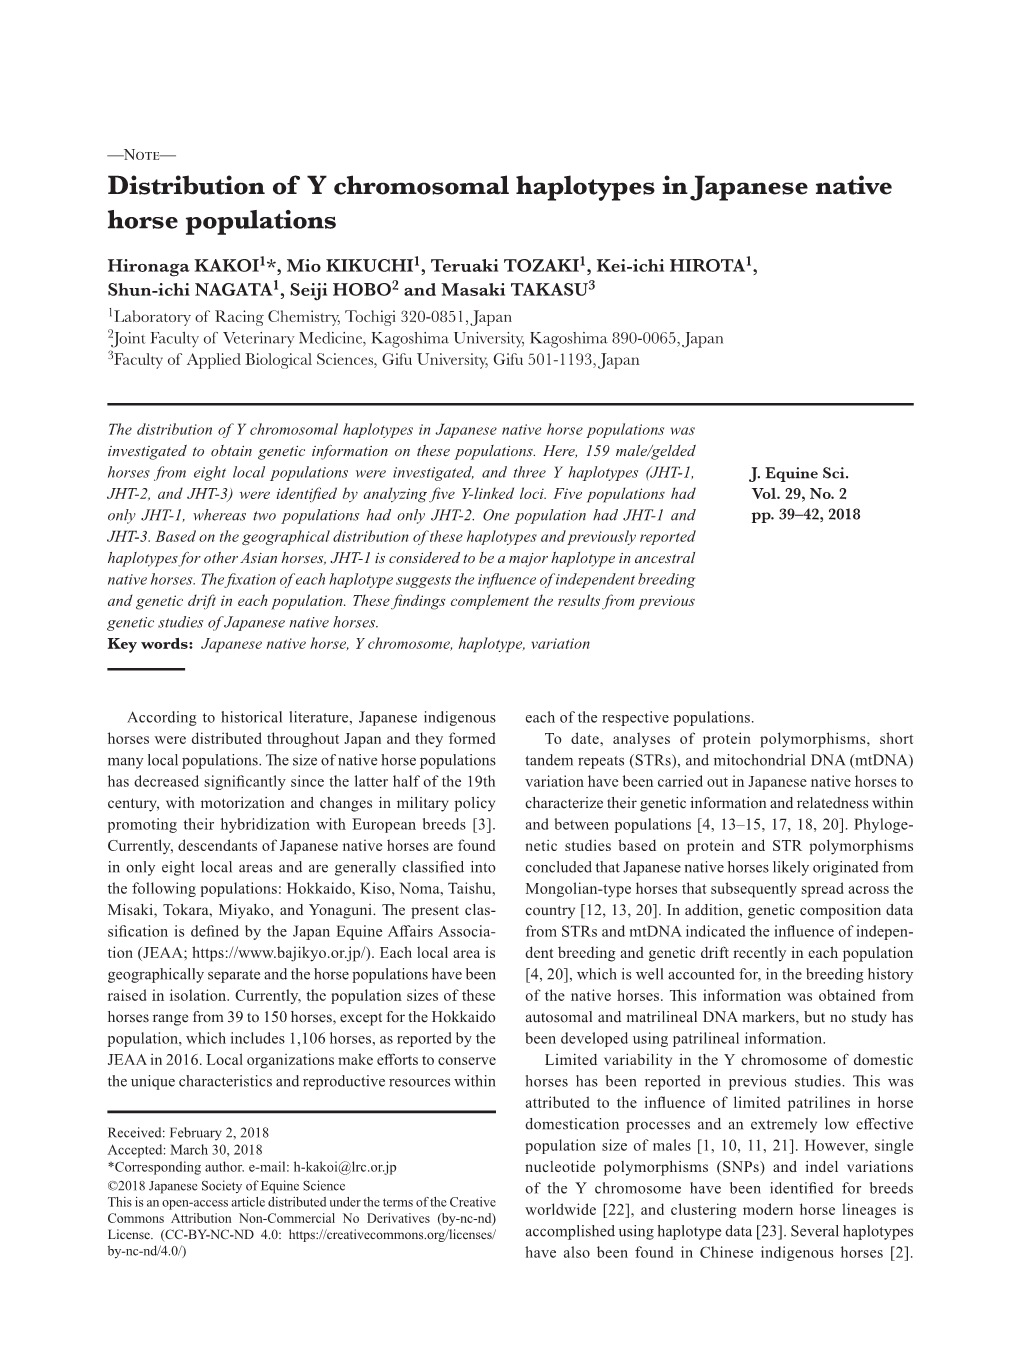 Distribution of Y Chromosomal Haplotypes in Japanese Native Horse Populations